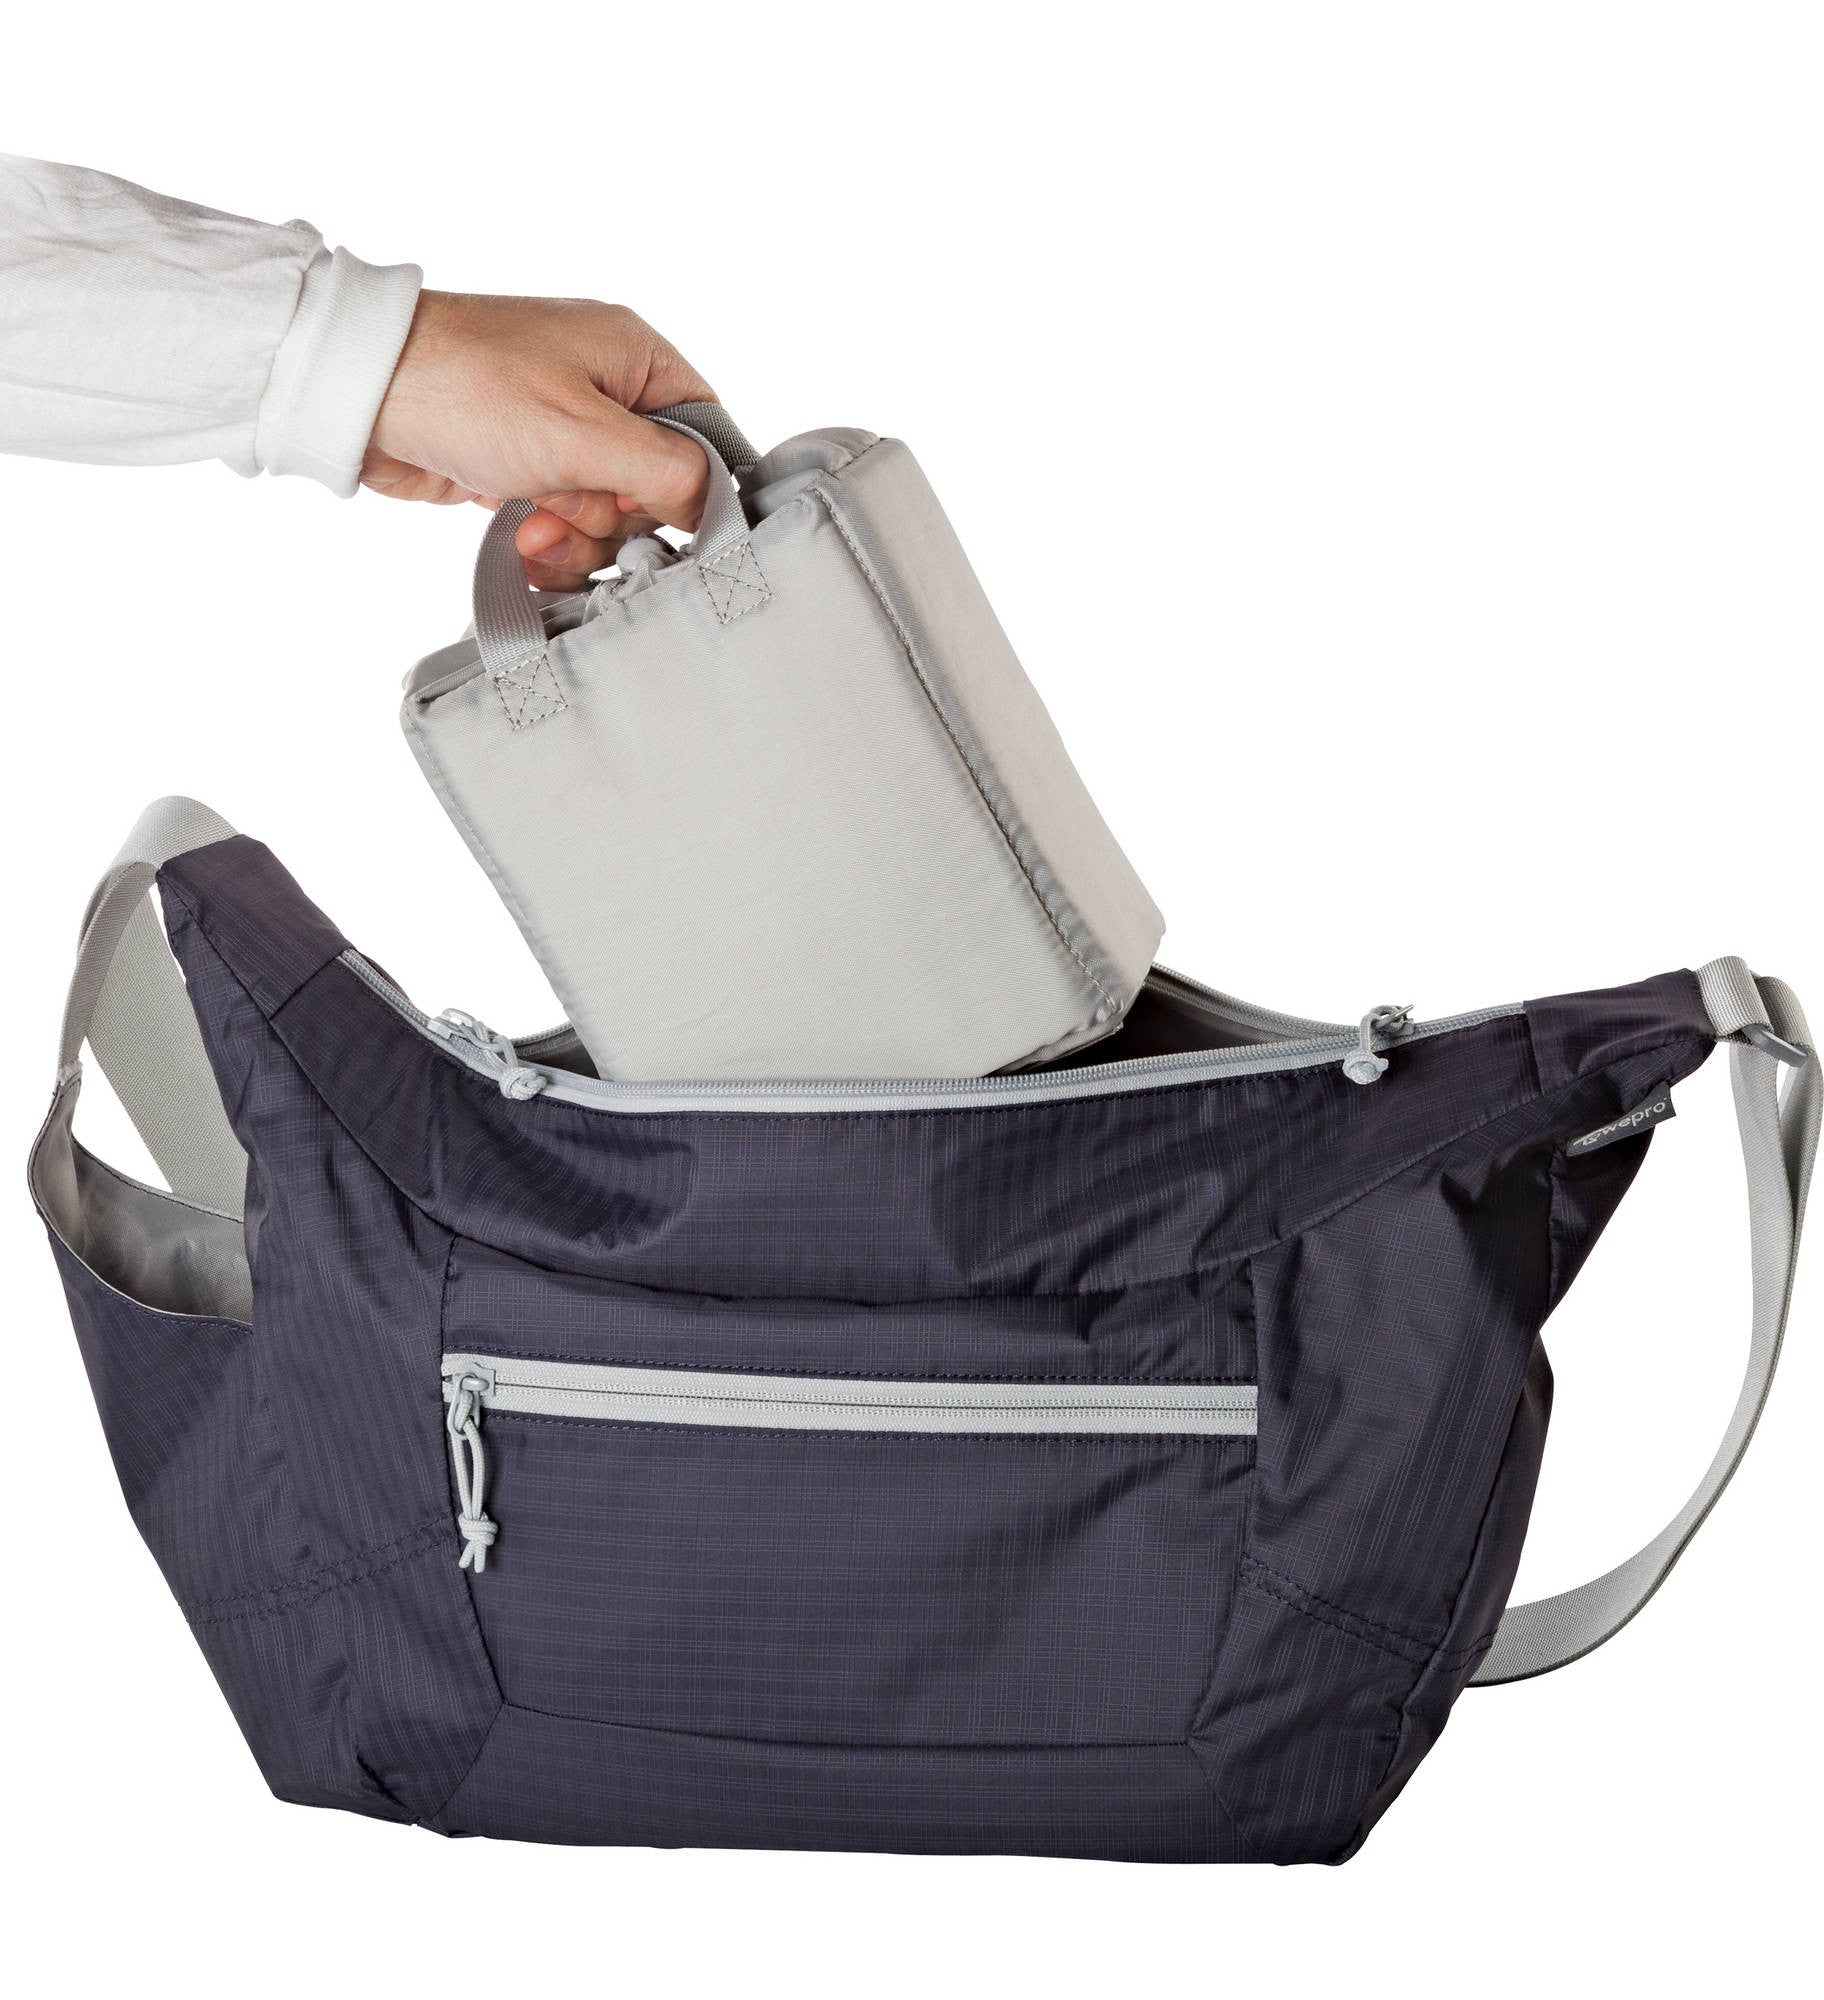 Lowepro Photo Sport Shoulder 12L Camera Bag (Purple/Grey), bags shoulder bags, Lowepro - Pictureline  - 2